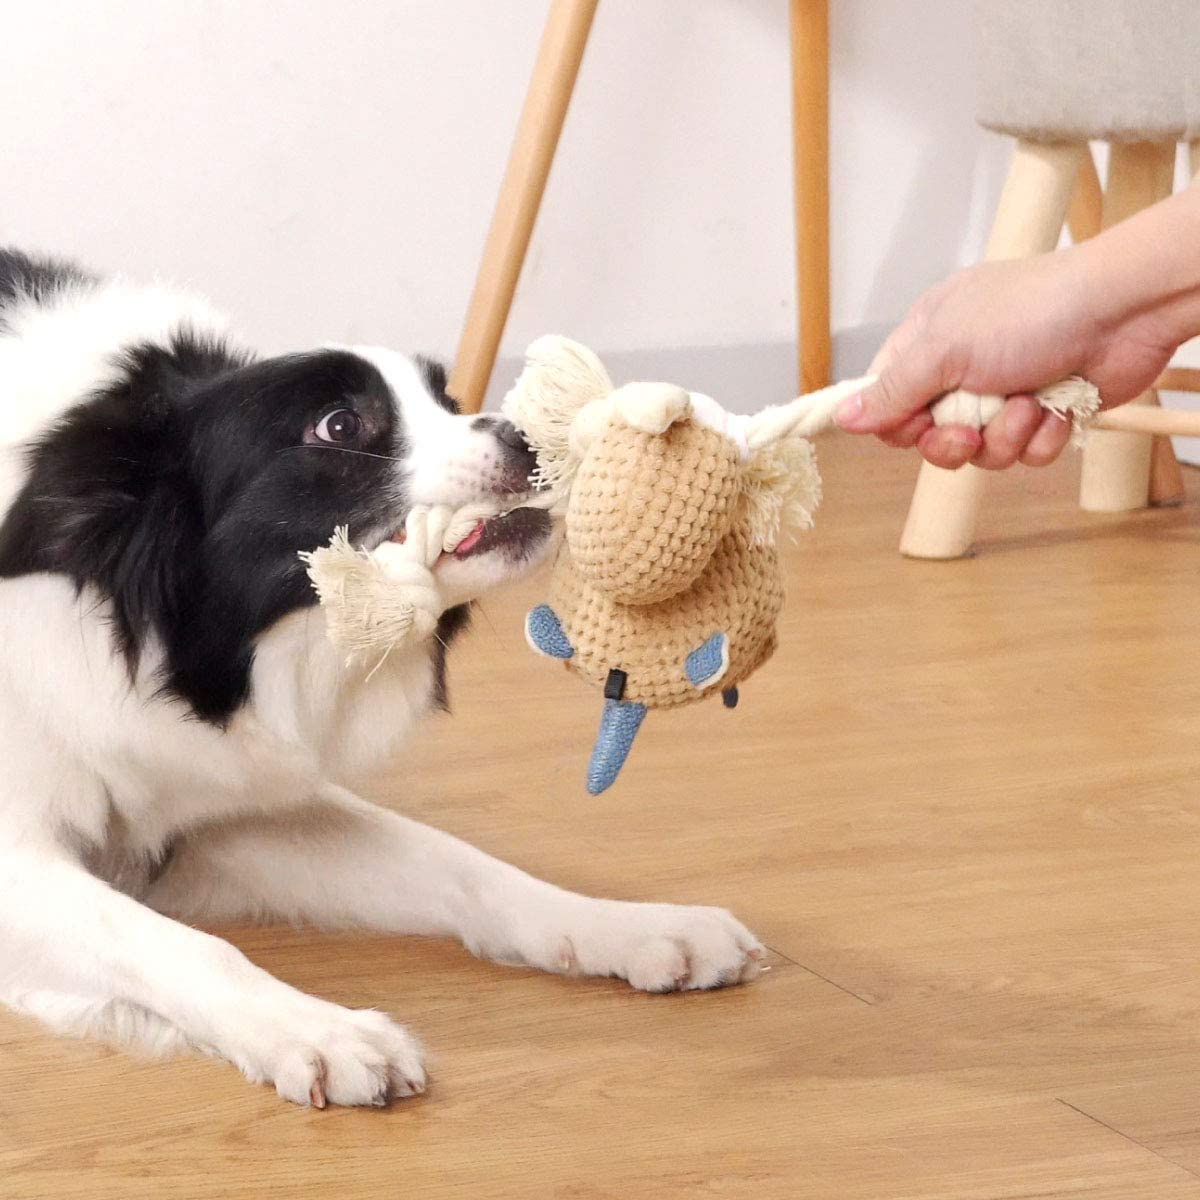 Sedioso - Brinquedos de pelúcia para cães